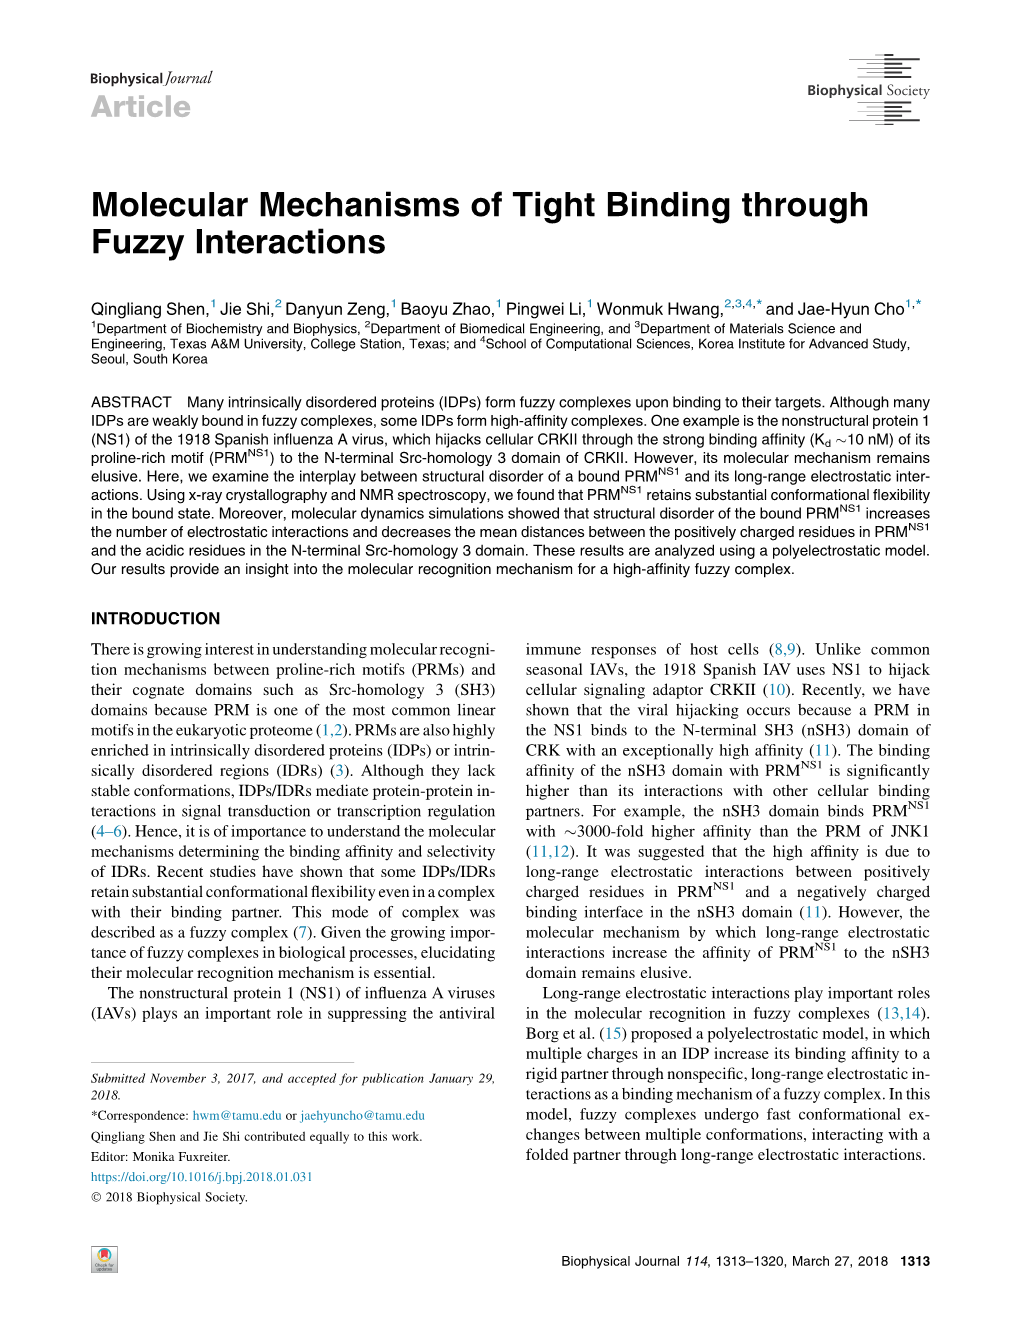 Molecular Mechanisms of Tight Binding Through Fuzzy Interactions